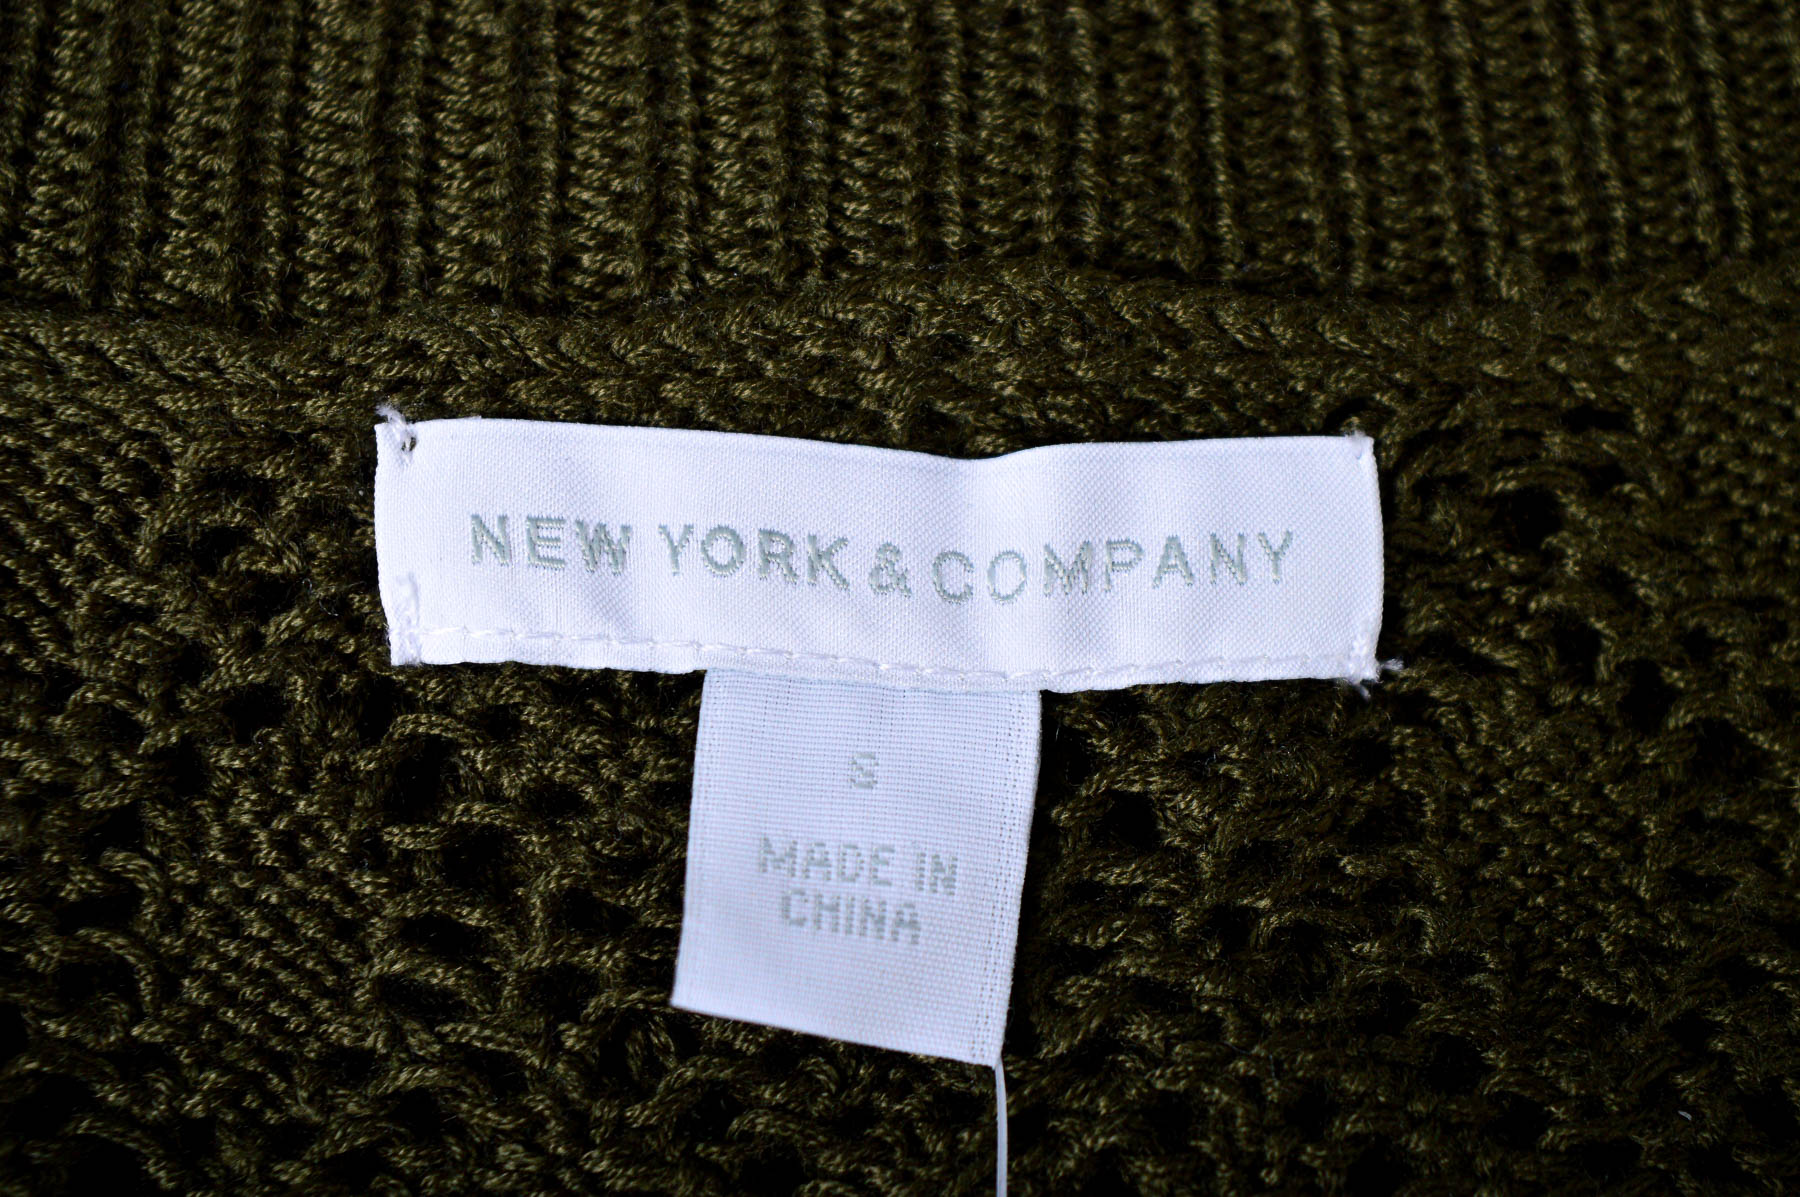 Дамски пуловер - New York & Company - 2